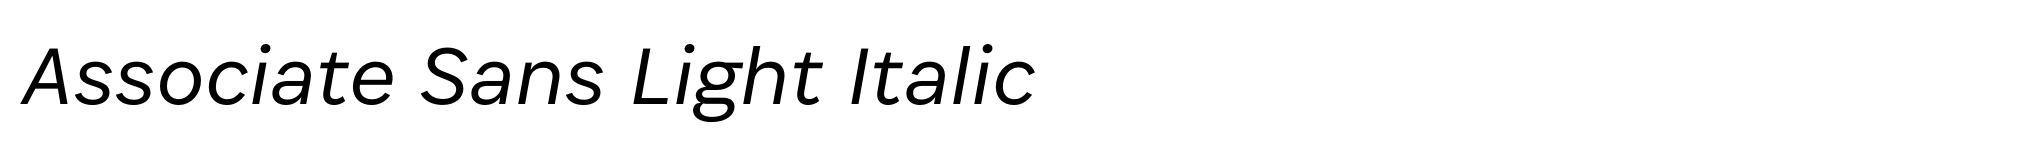 Associate Sans Light Italic image